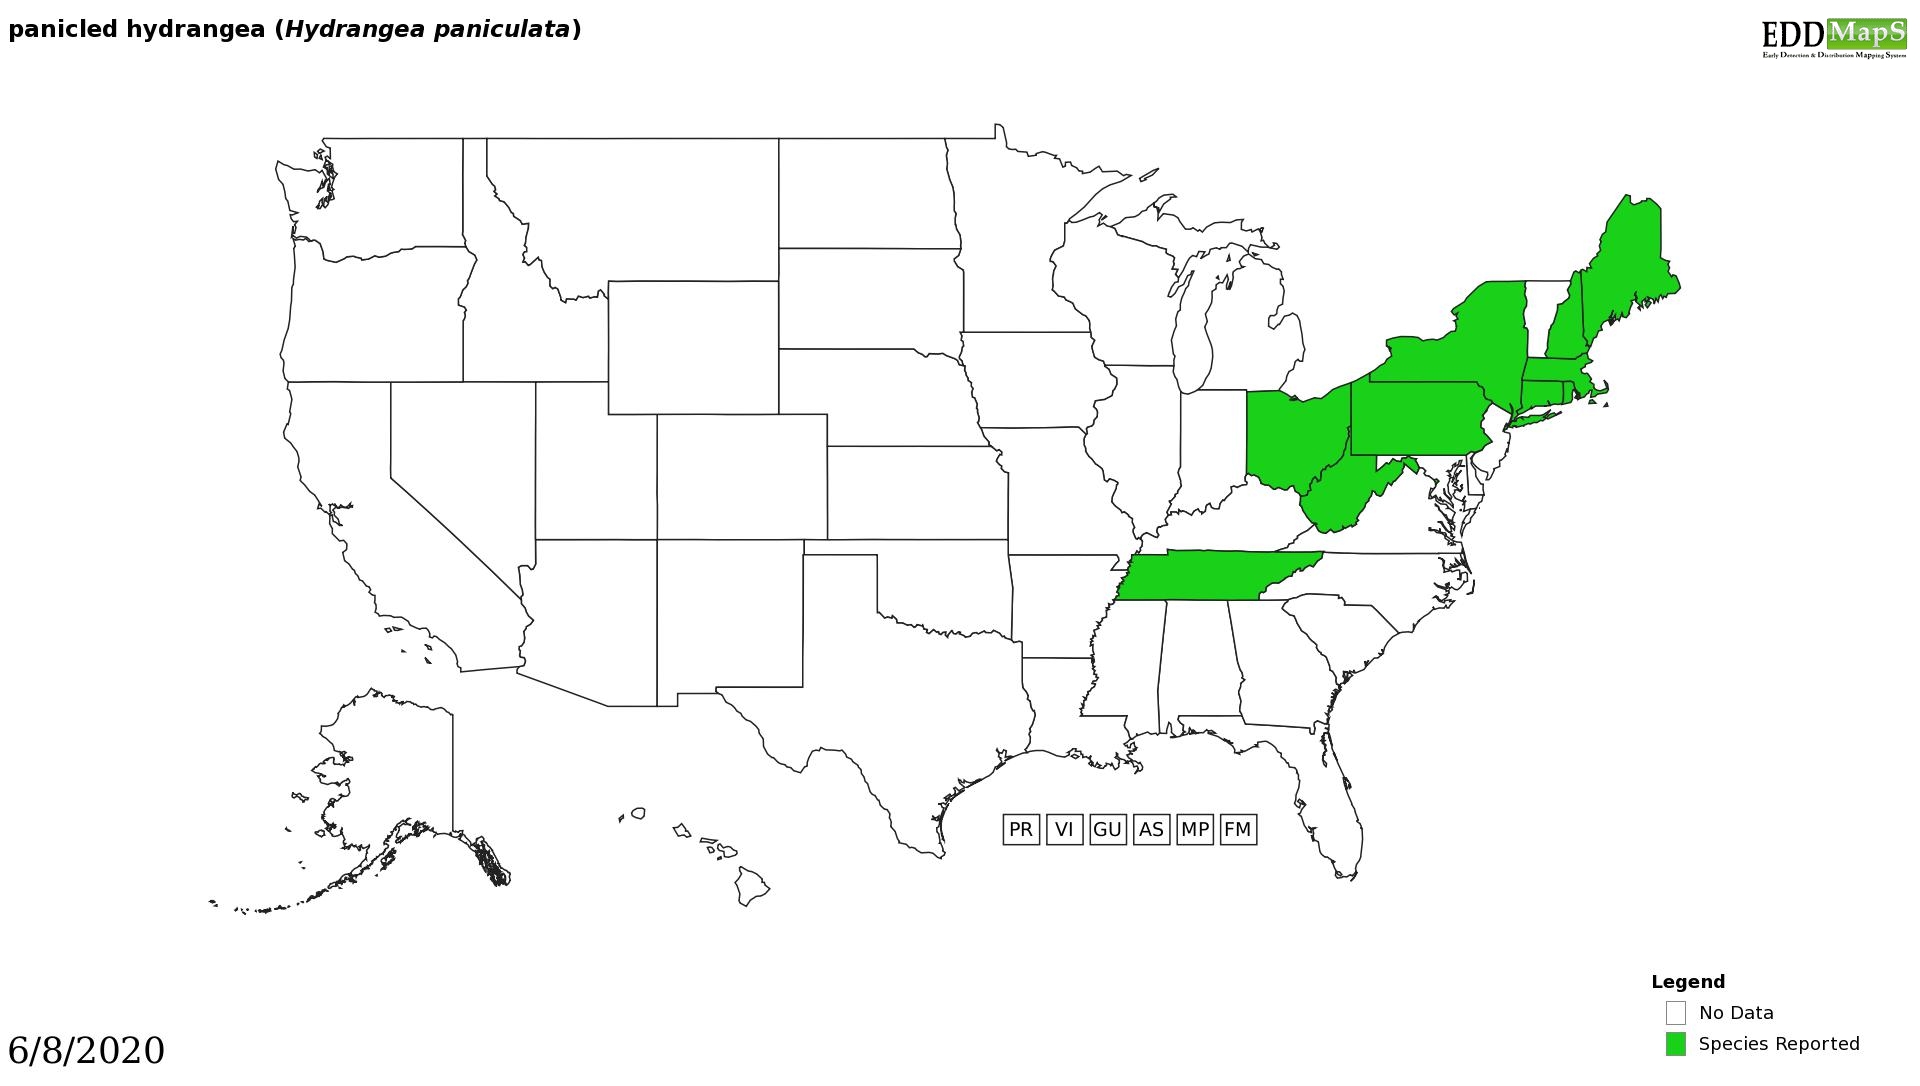 Hydrangea distribution - United States